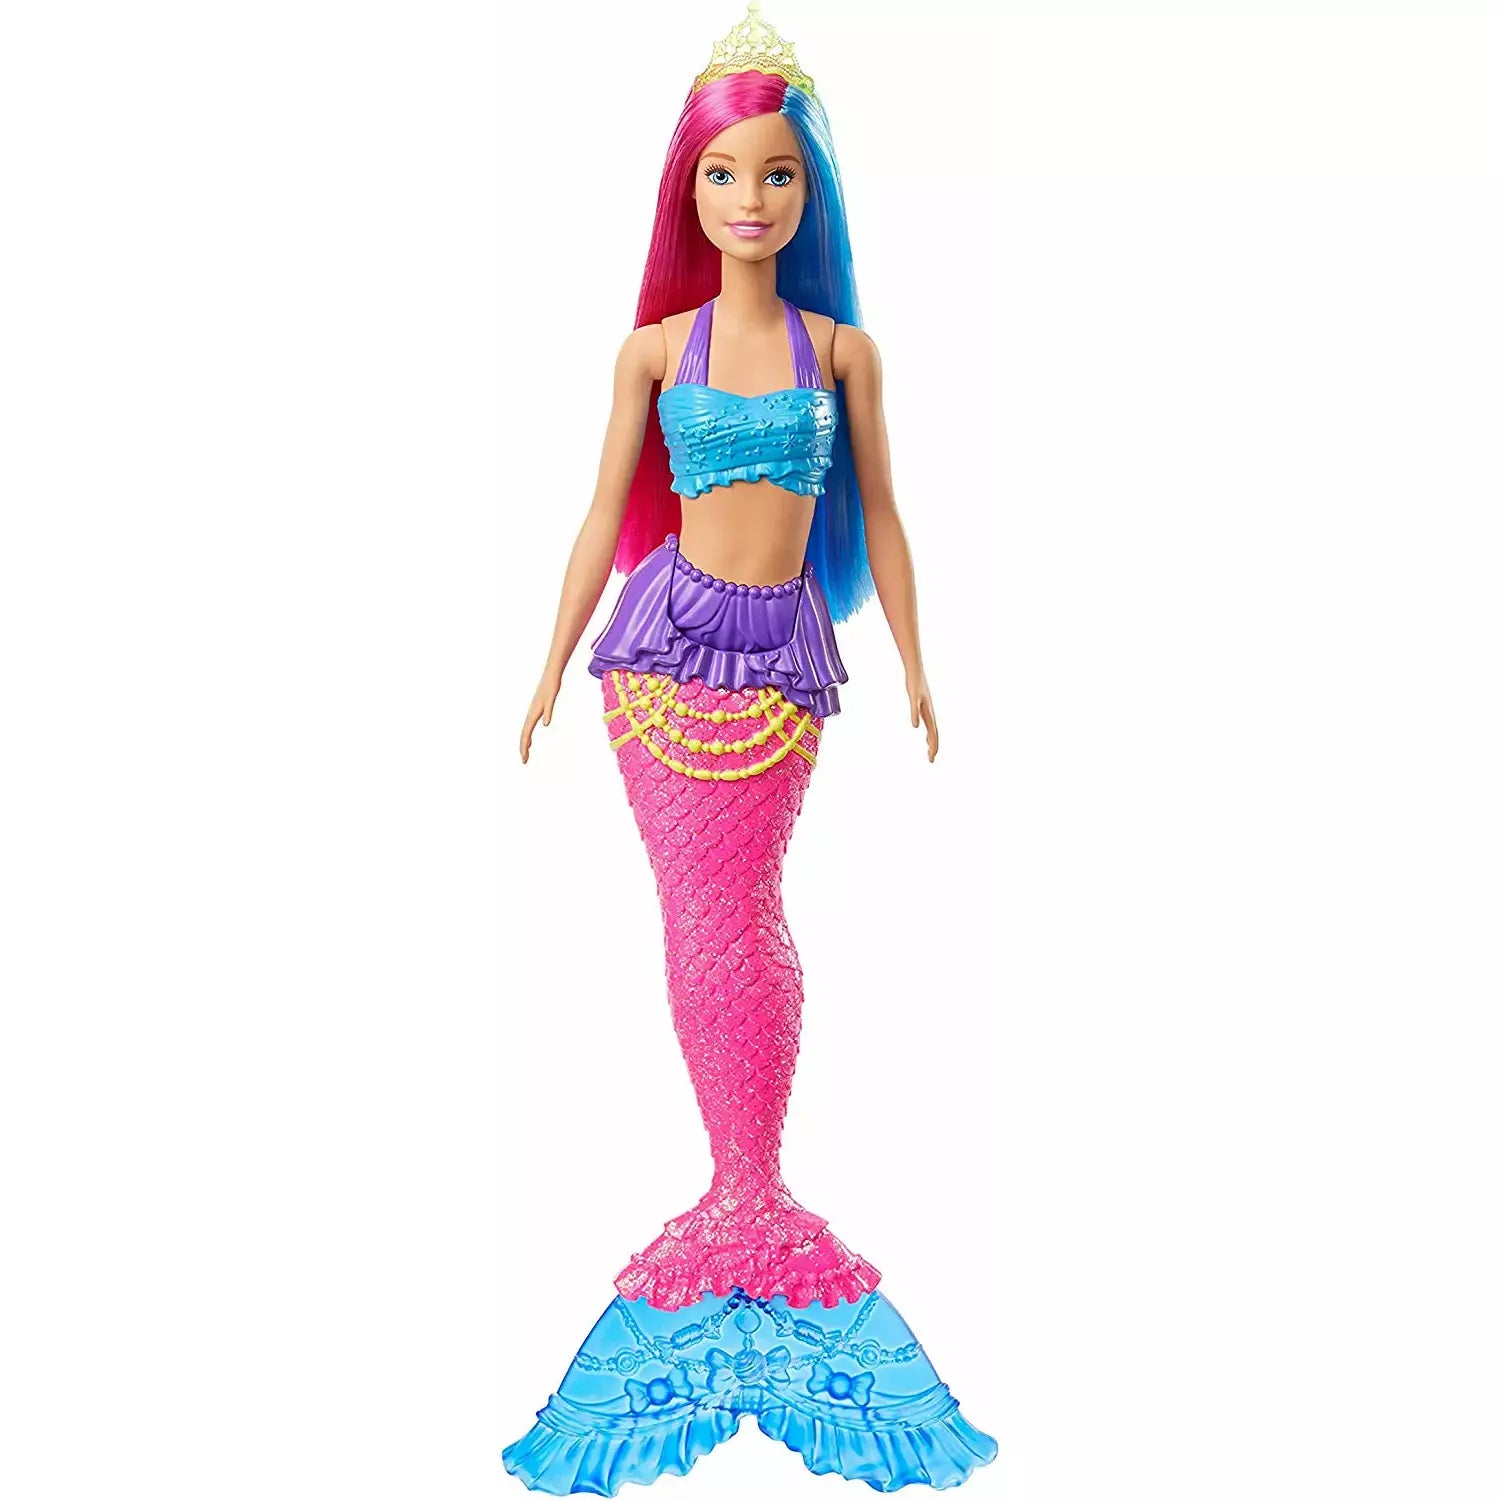 Barbie Dreamtopia Mermaid Doll, 12-inch, Pink and Blue Hair - BumbleToys - 5-7 Years, Barbie, Fashion Dolls & Accessories, Girls, Mermaid